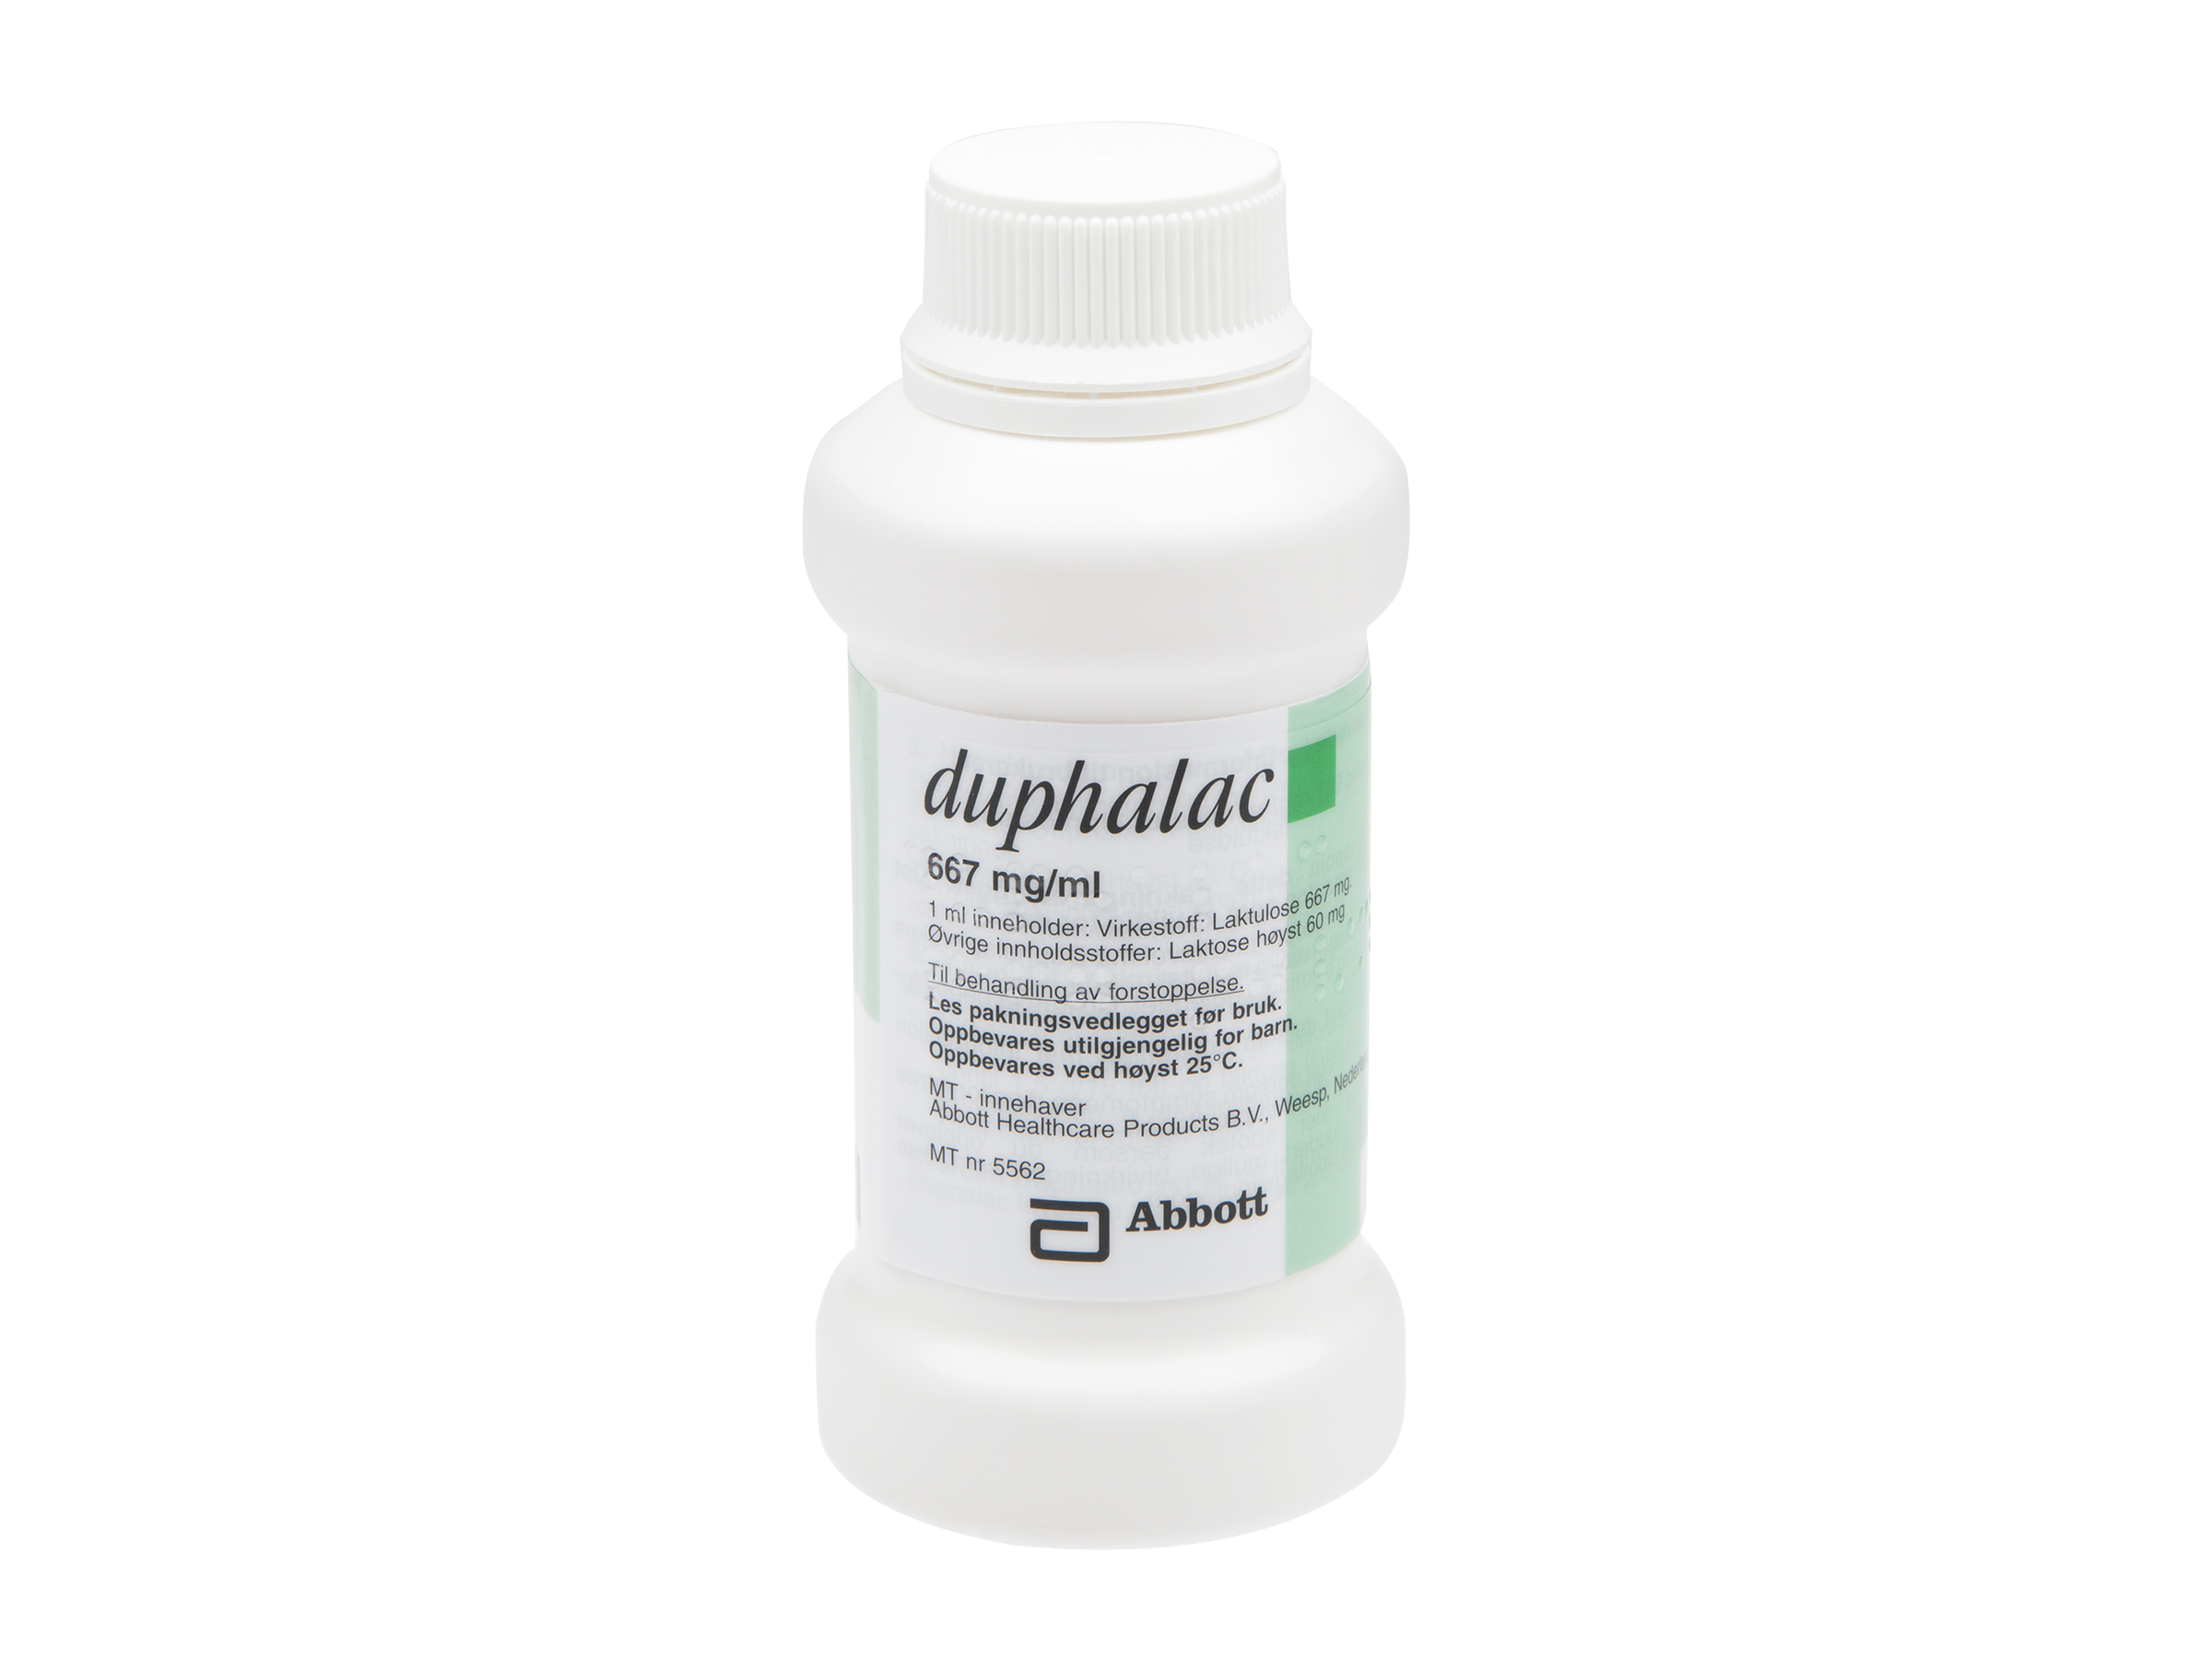 Duphalac Mikstur 667mg/ml, 200 ml.